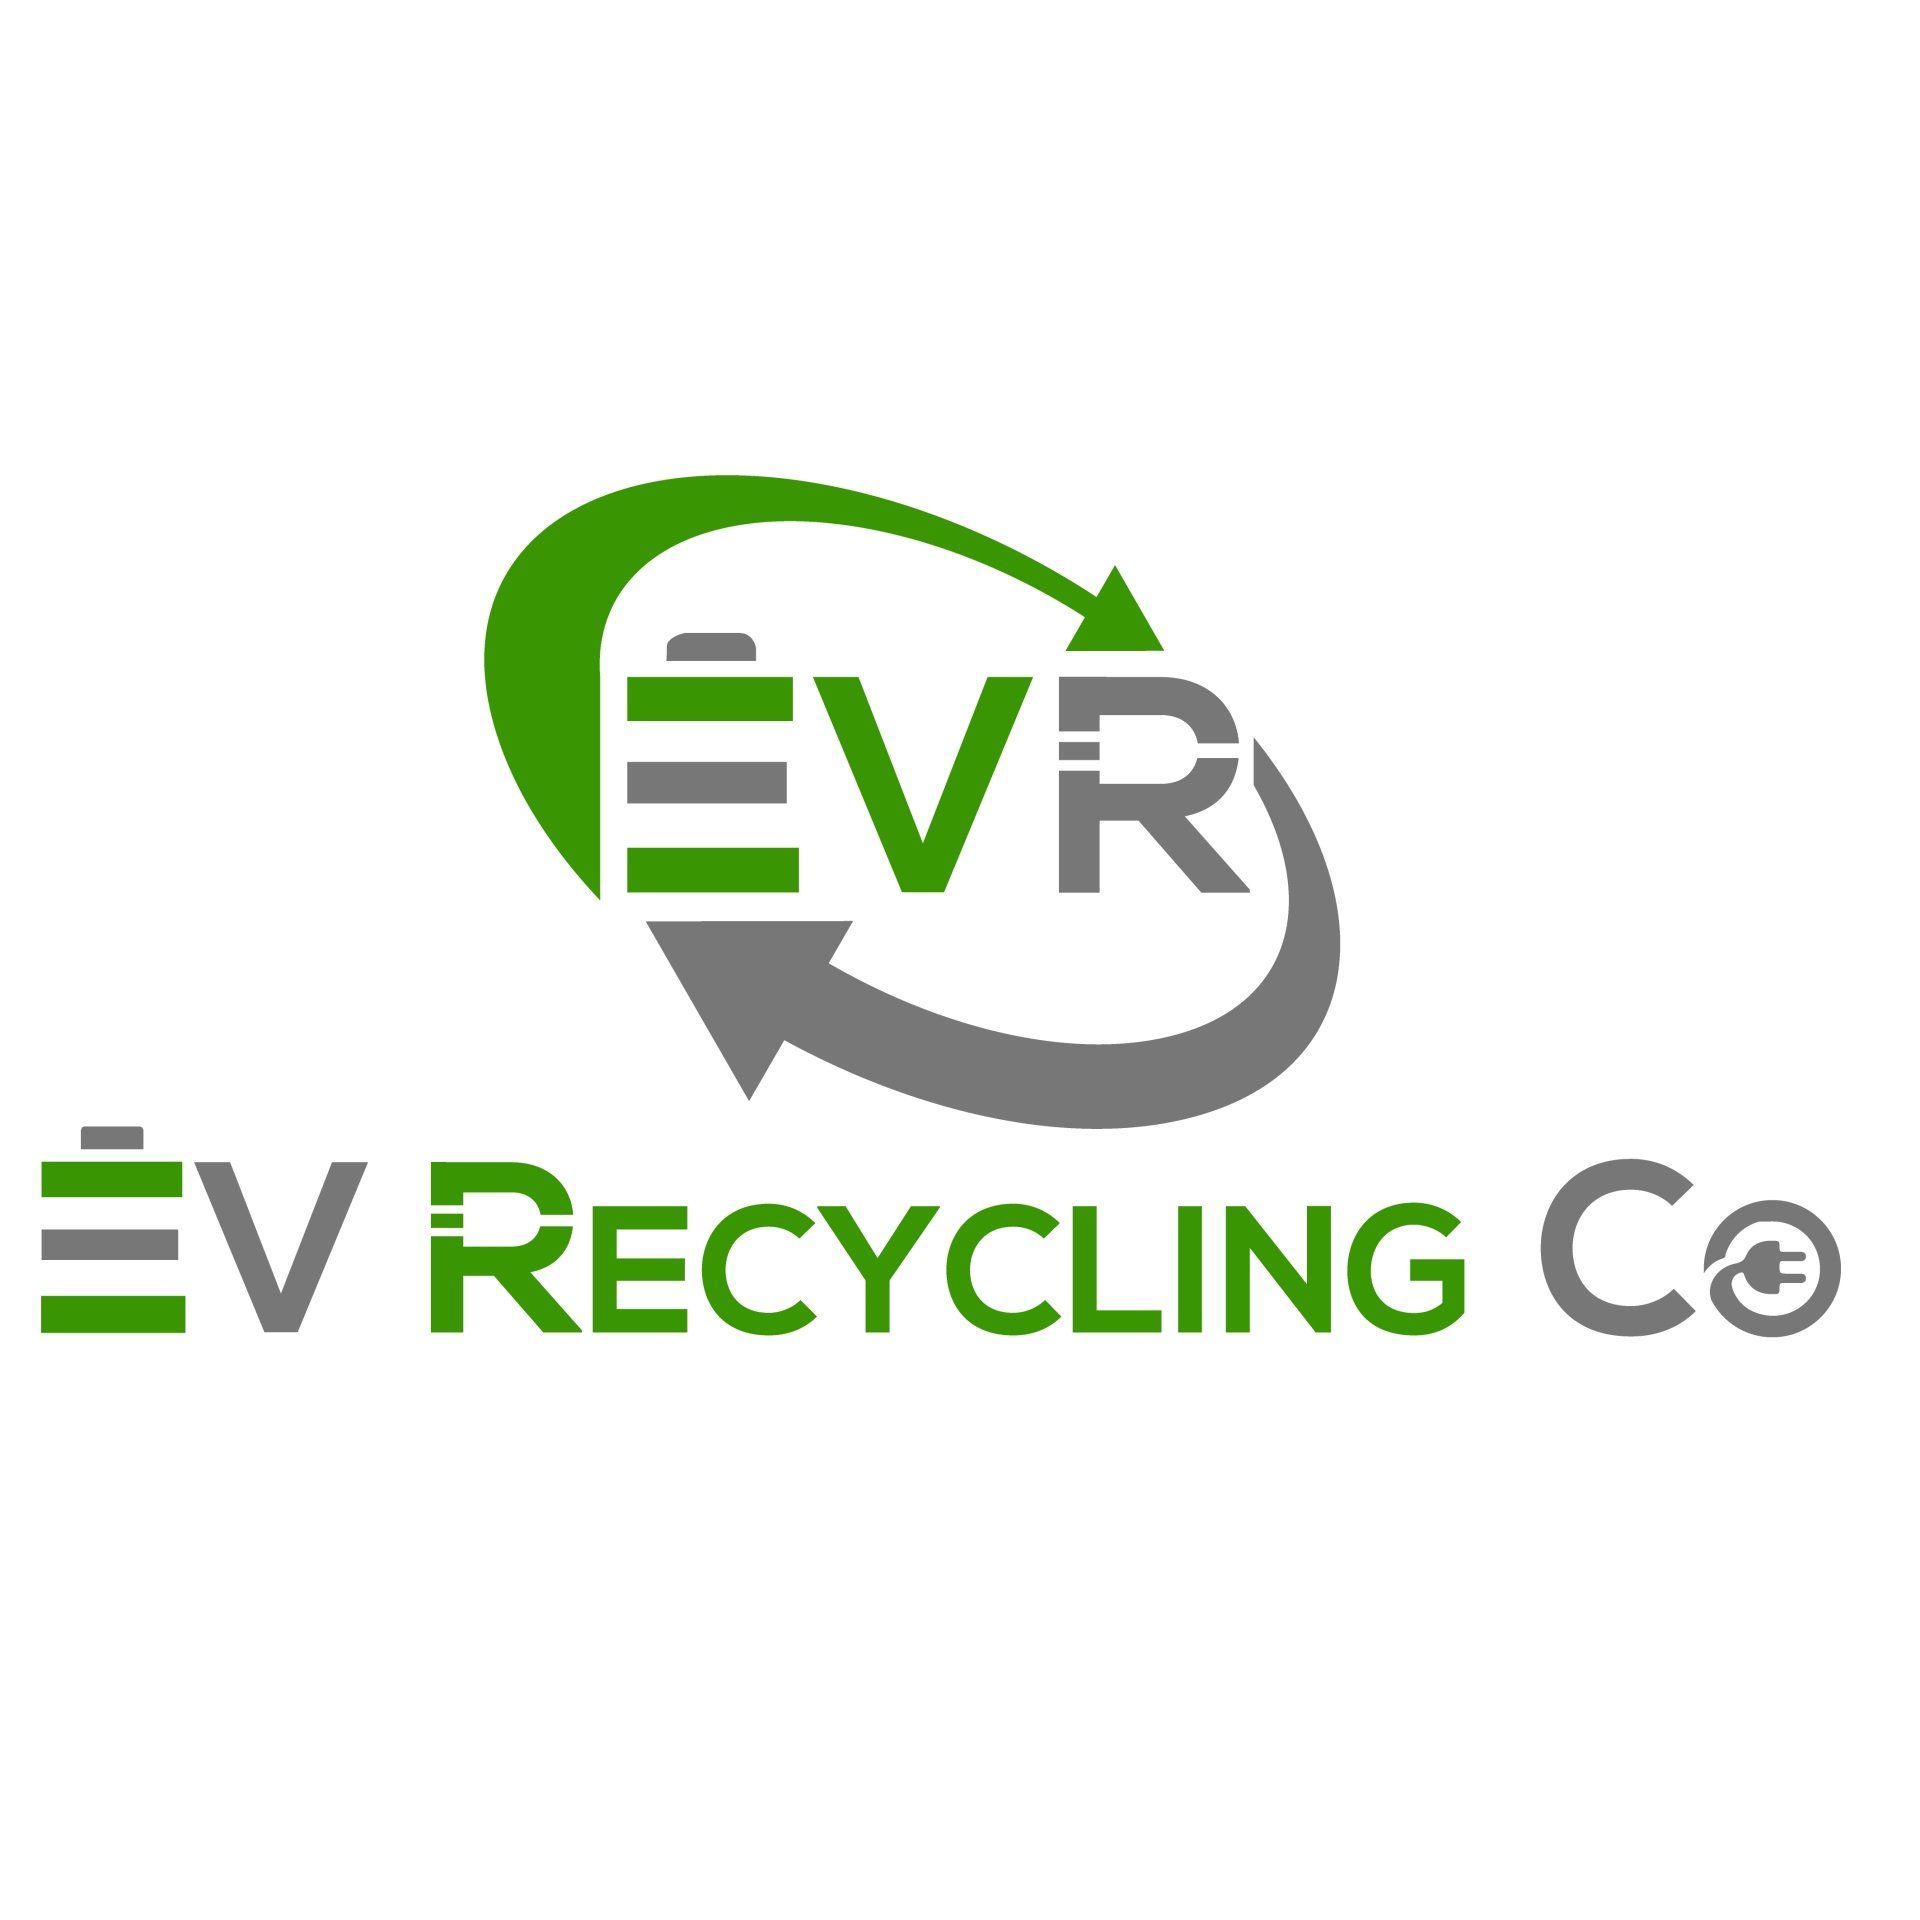 Valvoline Inc. - Valvoline Begins EV Service Offerings in U.S.